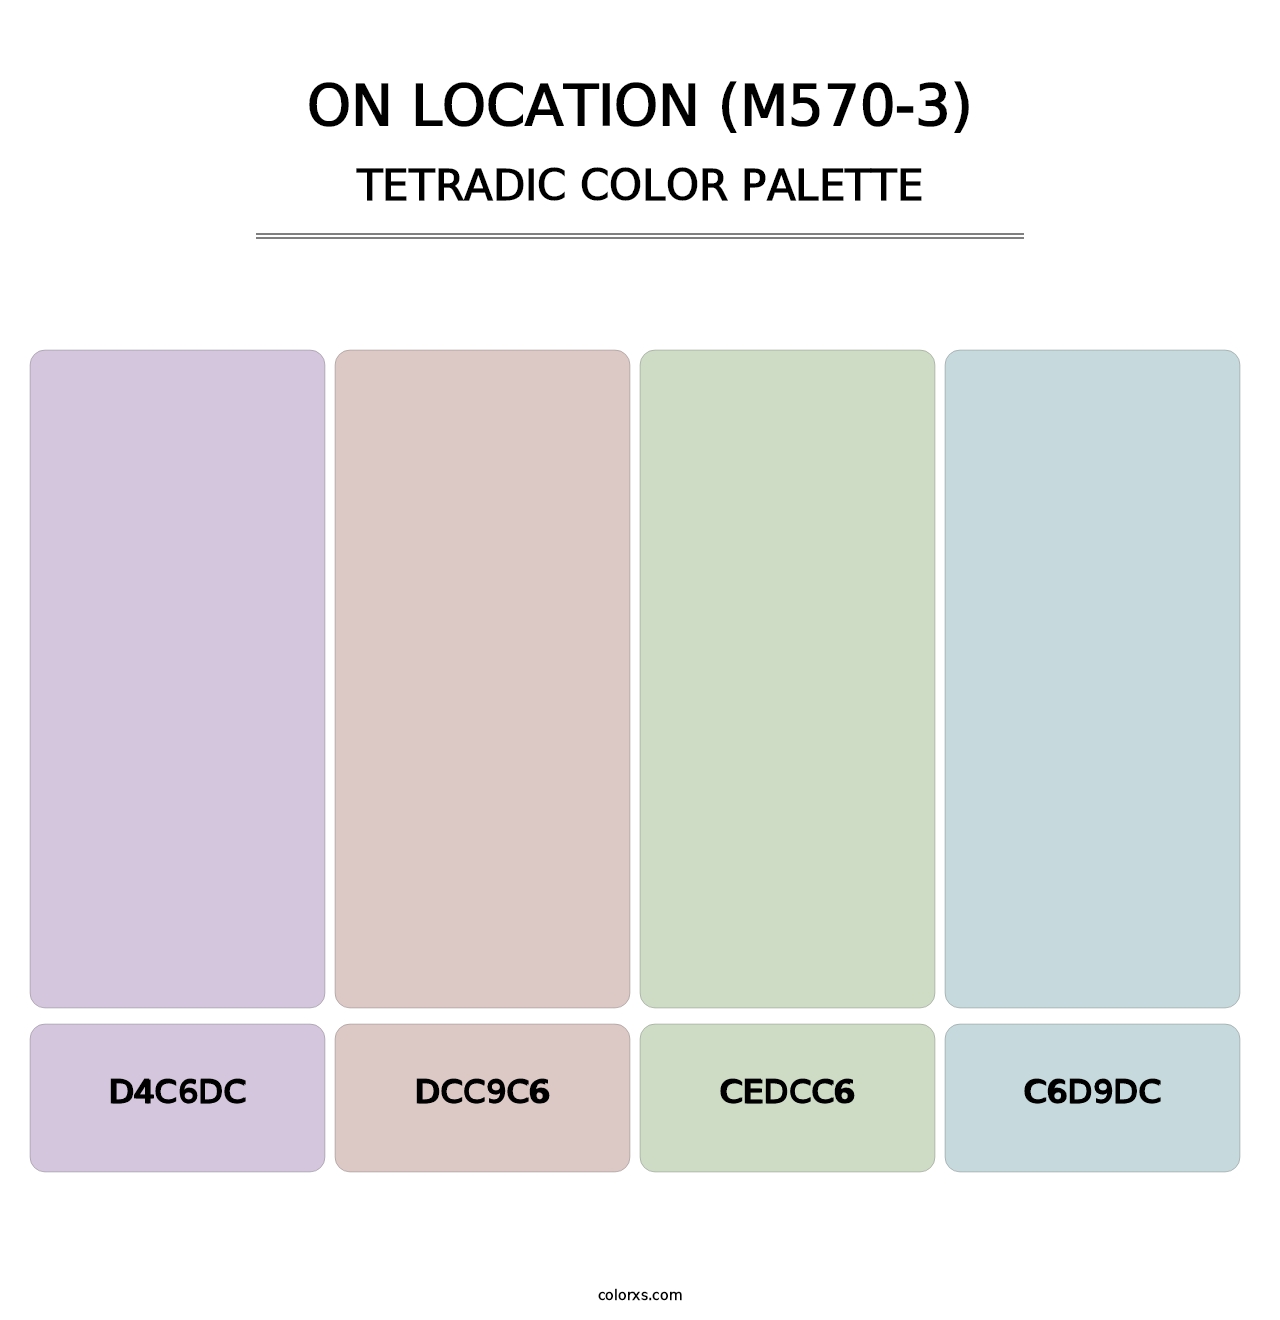 On Location (M570-3) - Tetradic Color Palette